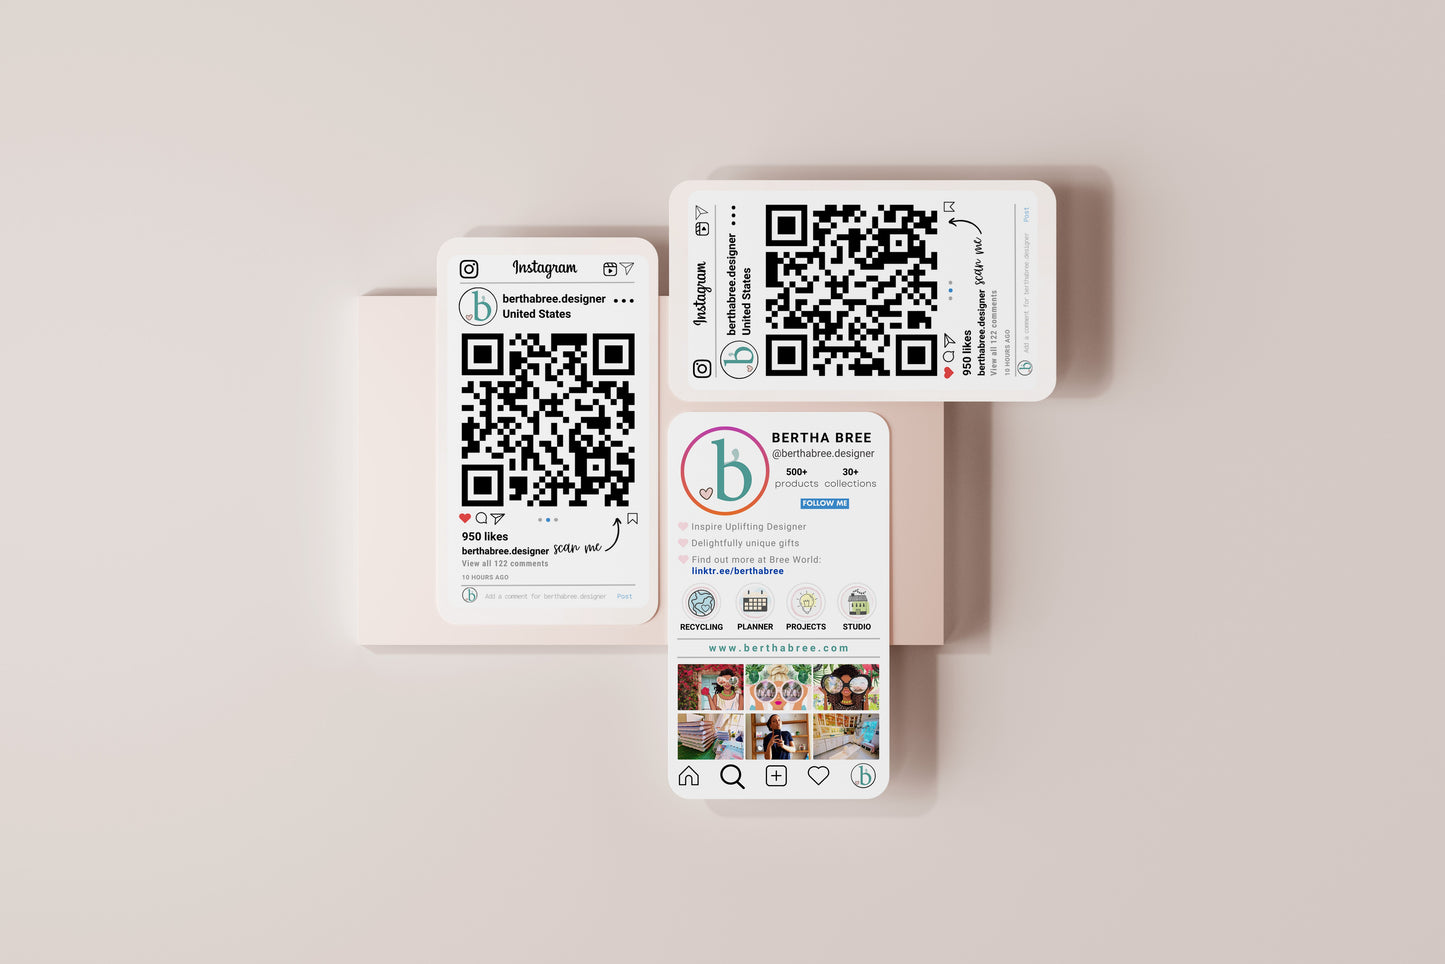 Instagram Business Card Template Editable in Canva - Creative Business Card Customizable